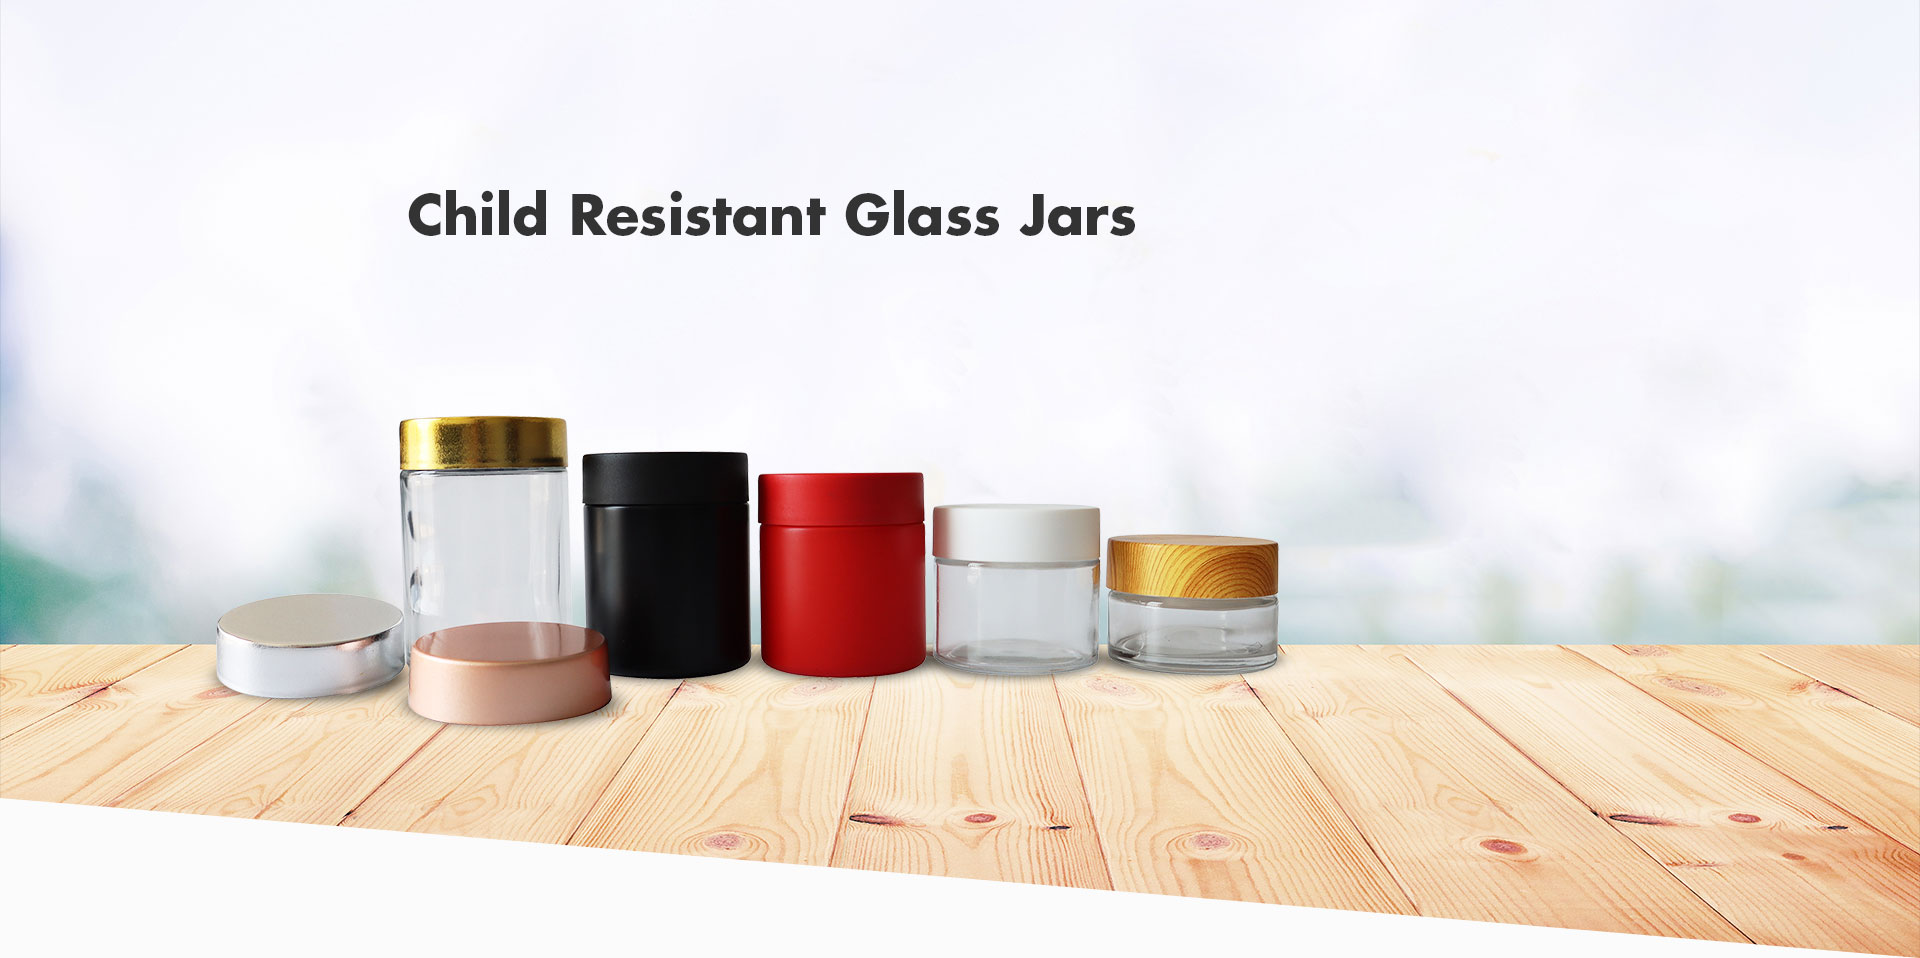 Child Resistant Glass Jars